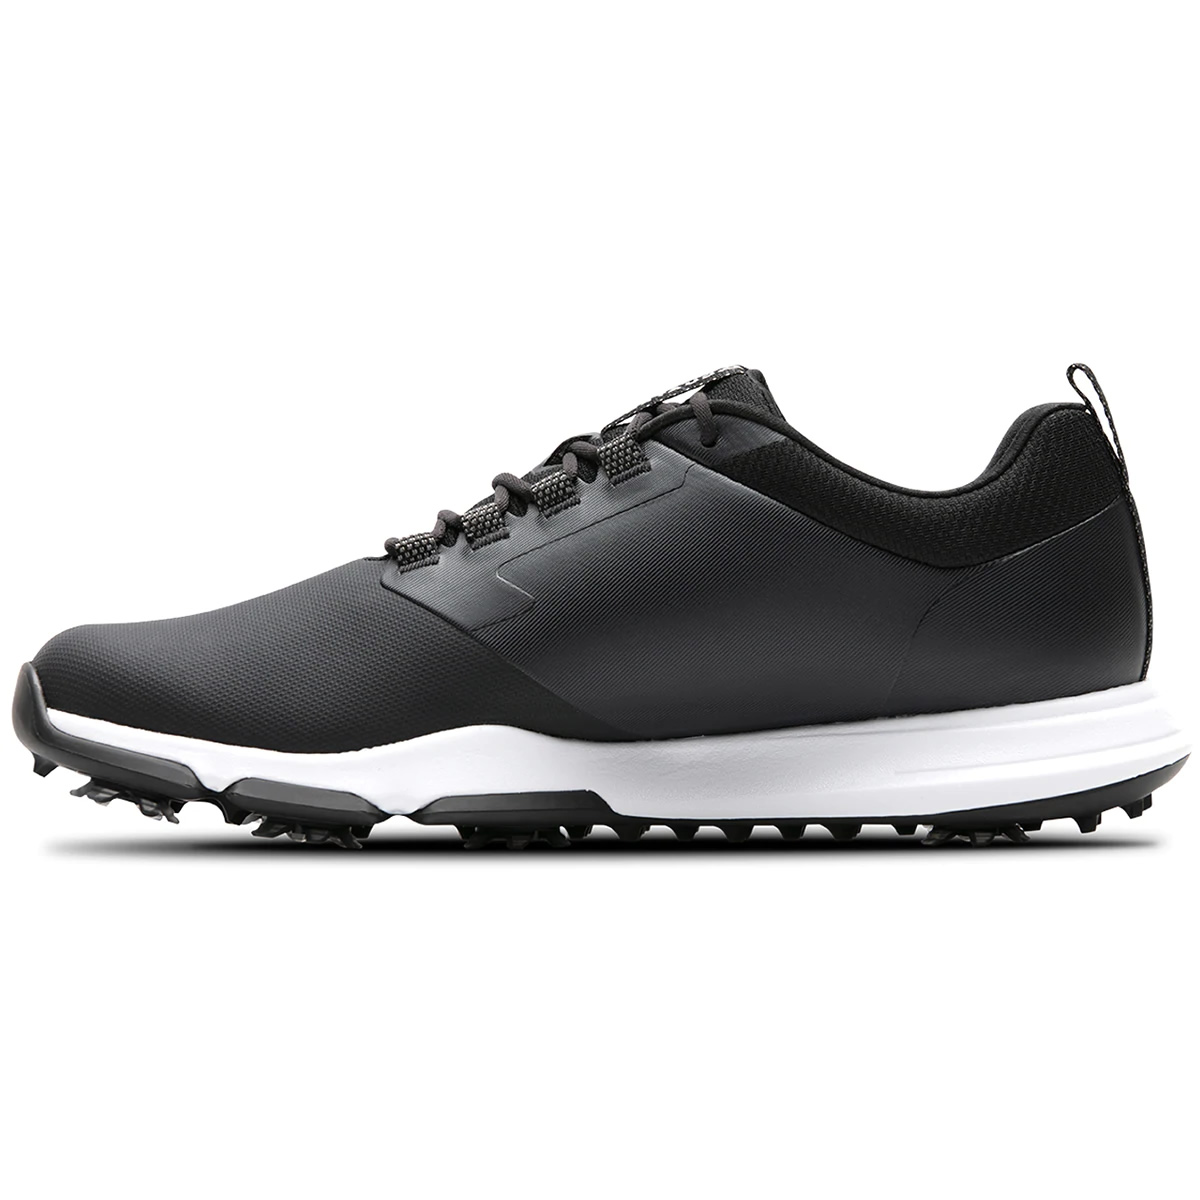 Cuater The Ringer Golf Shoes Black | Scottsdale Golf